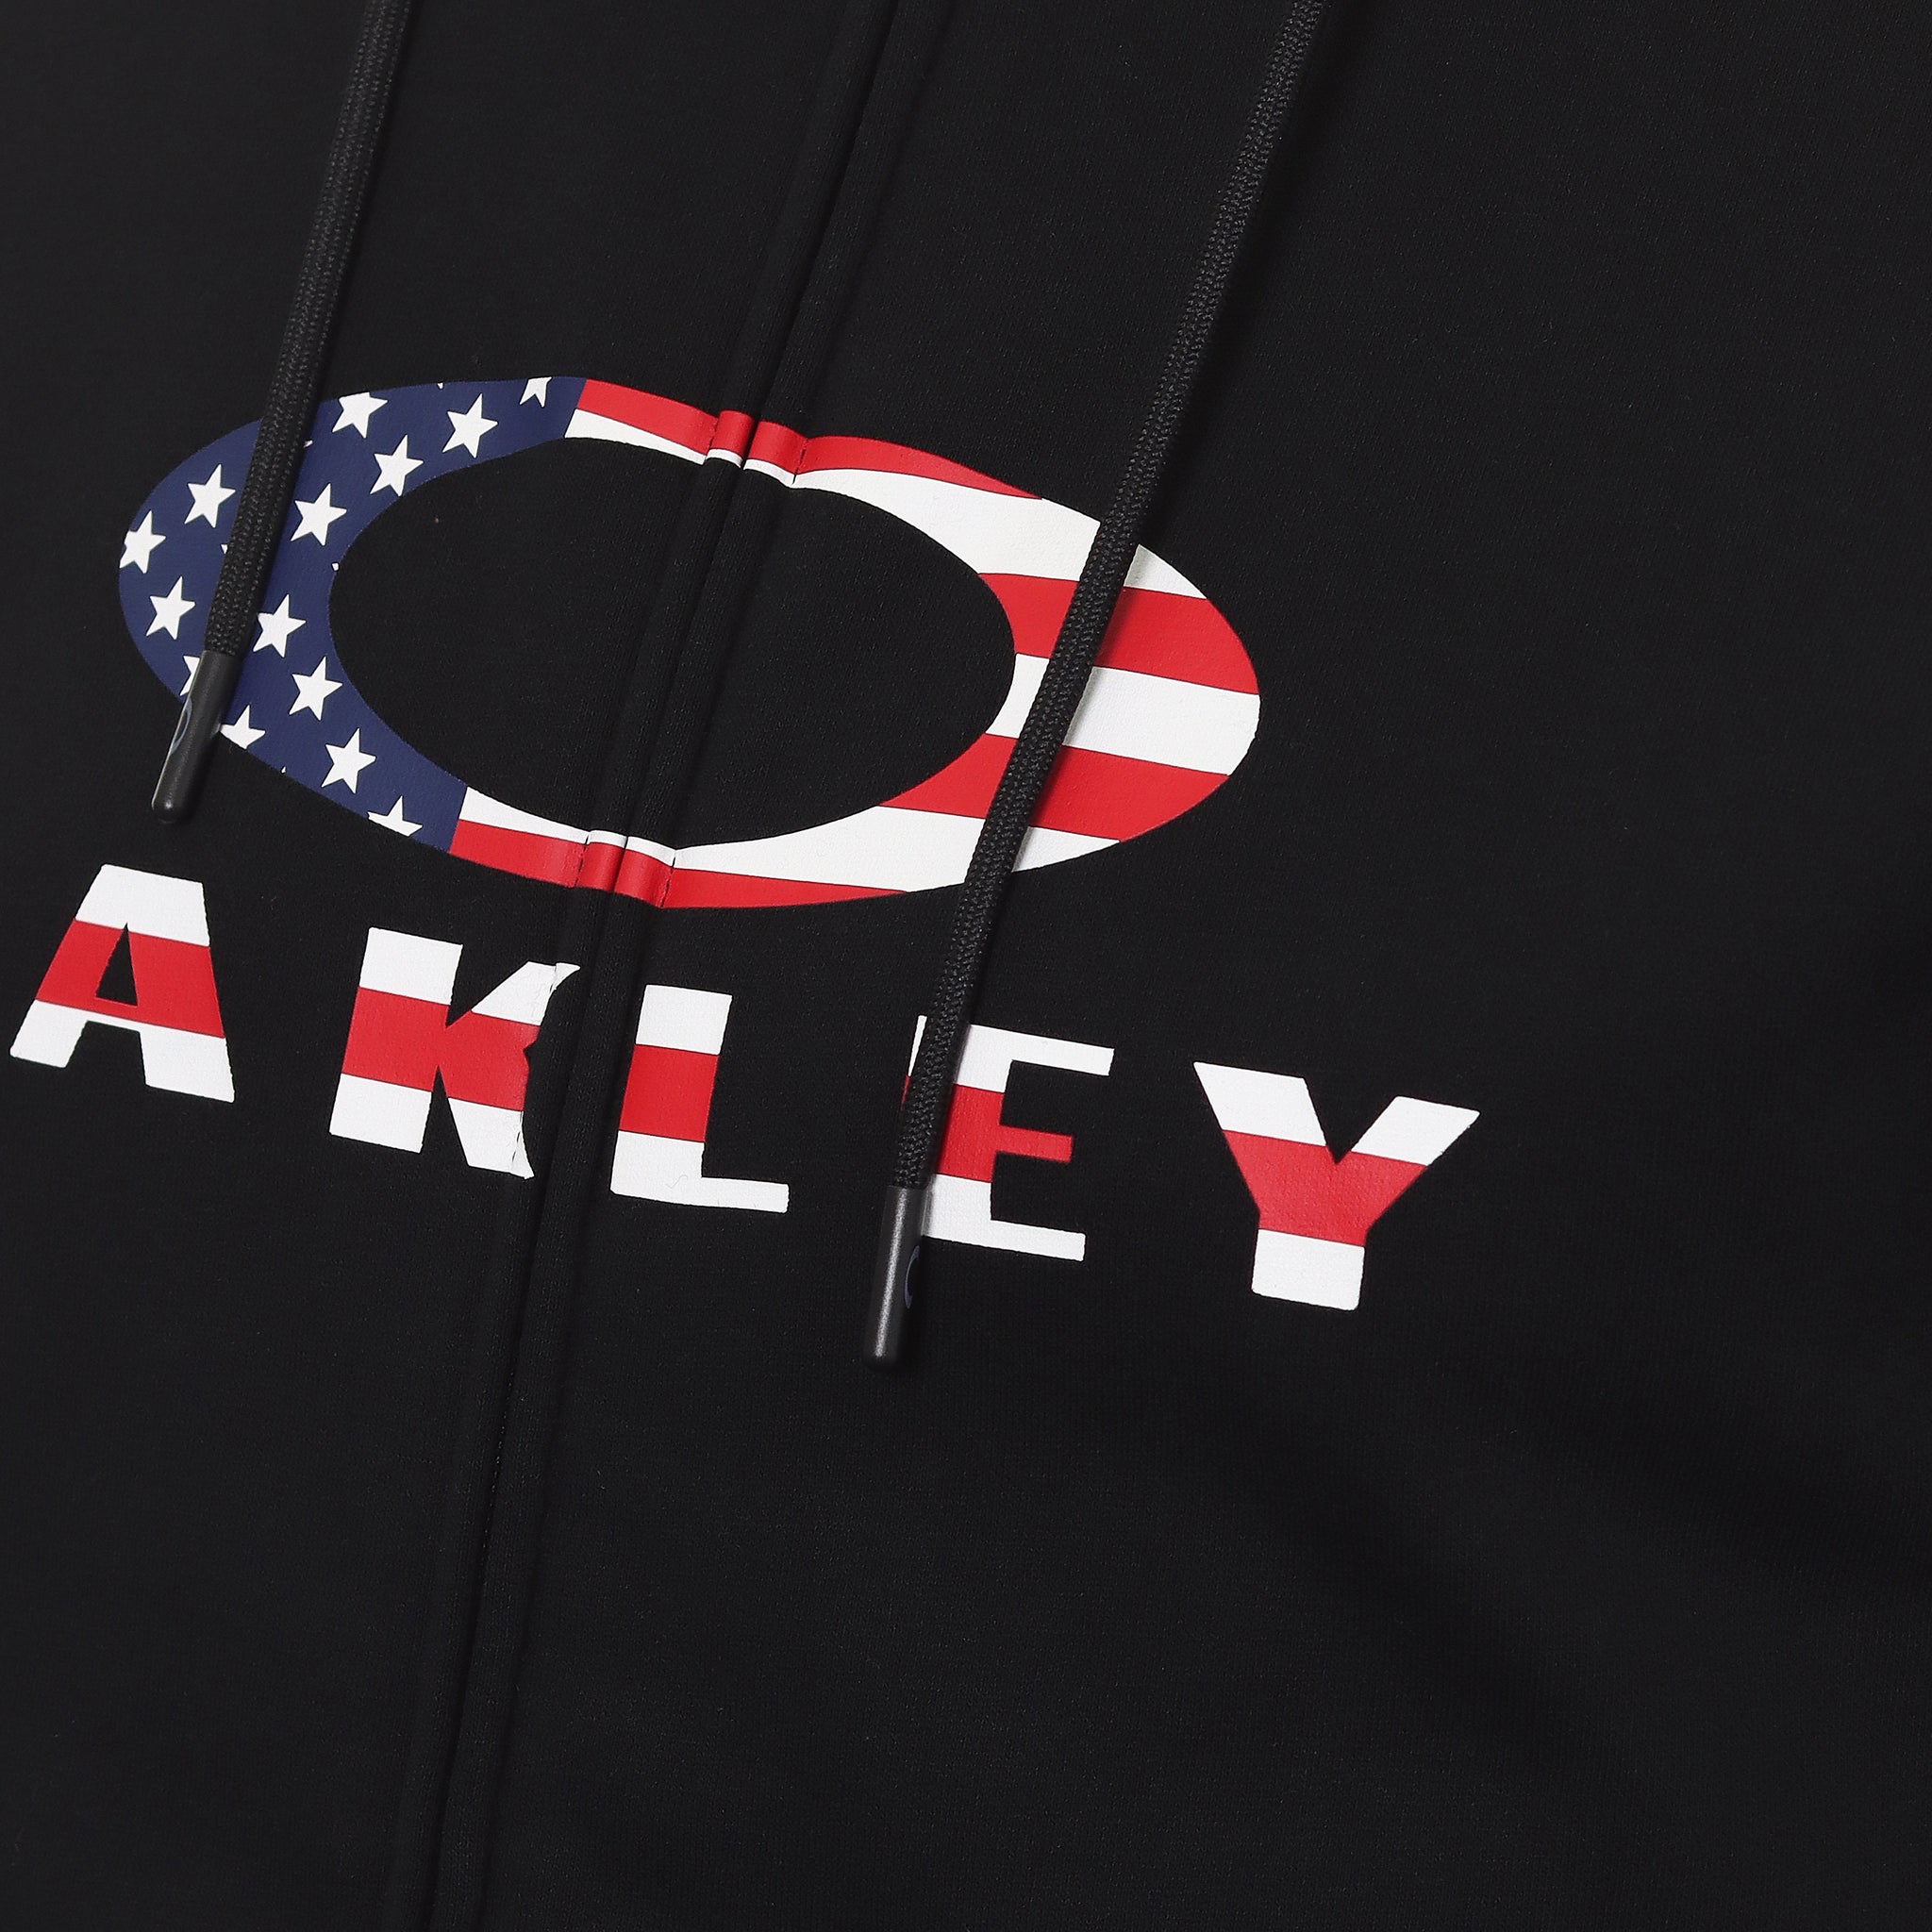 oakley-bark-full-zip-hoodie-2-0-402598-black-america-01v